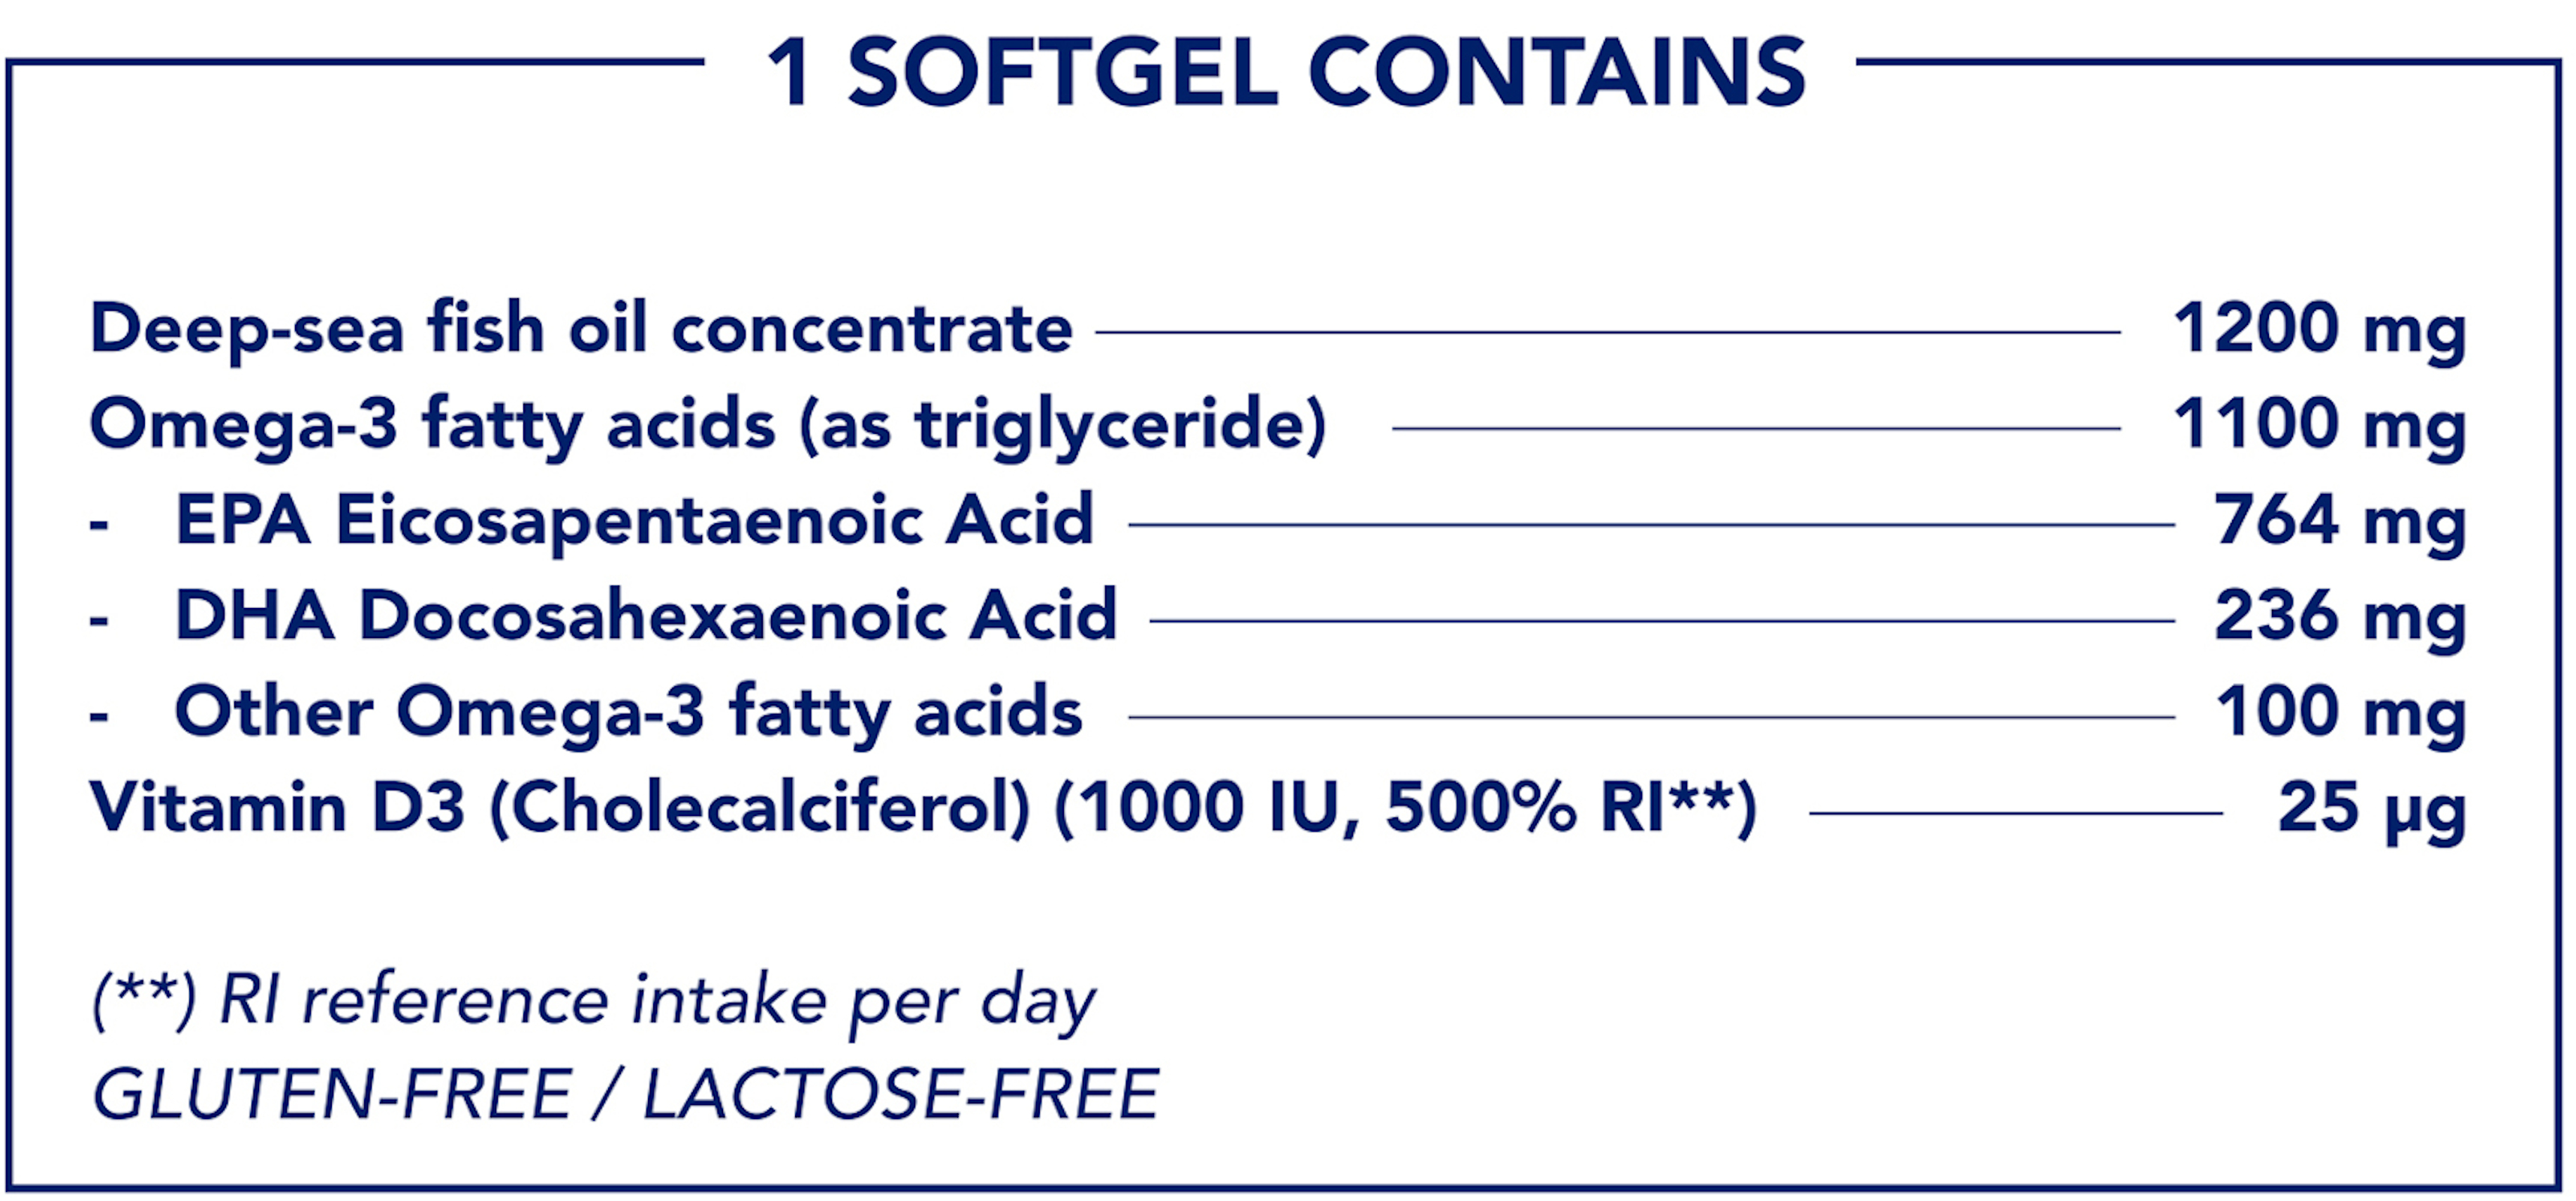 1 SOFTGEL CONTAINS:
                                  Deep-sea fish oil concentrate 1200 mg
                                  Omega-3 fatty acids (as triglyceride) 1100 mg
                                  EPA Eicosapentaenoic Acid 764 mg
                                  DHA Docosahexaenoic Acid 236 mg
                                  Other Omega-3 fatty acids 100 mg
                                  Vitamin D3 (Cholecalciferol) (1000 IU, 500% RI**) 25 µg

                                  (**) Rl reference intake per day
                                  GLUTEN-FREE / LACTOSE-FREE